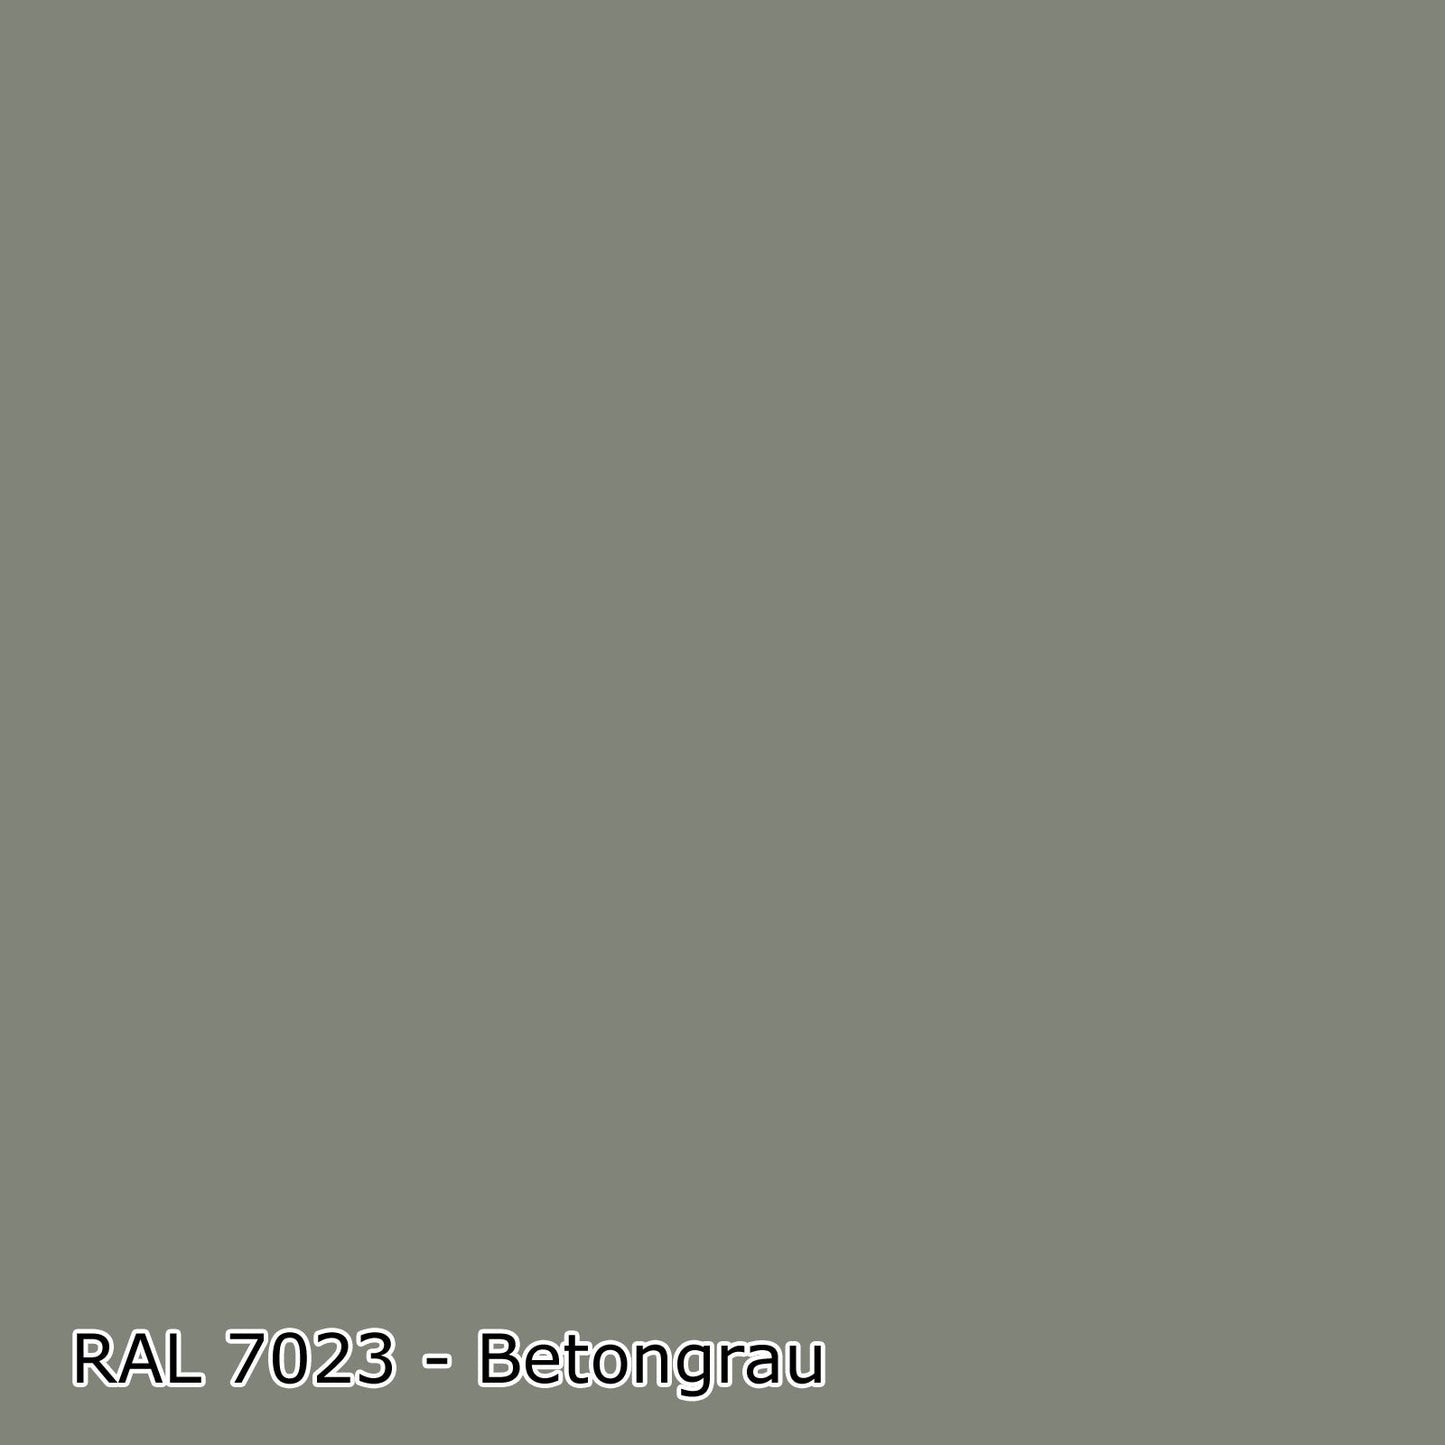 1 L Buntlack, Kunstharzlack, RAL Farbwahl - MATT (RAL 6010 - 9018)